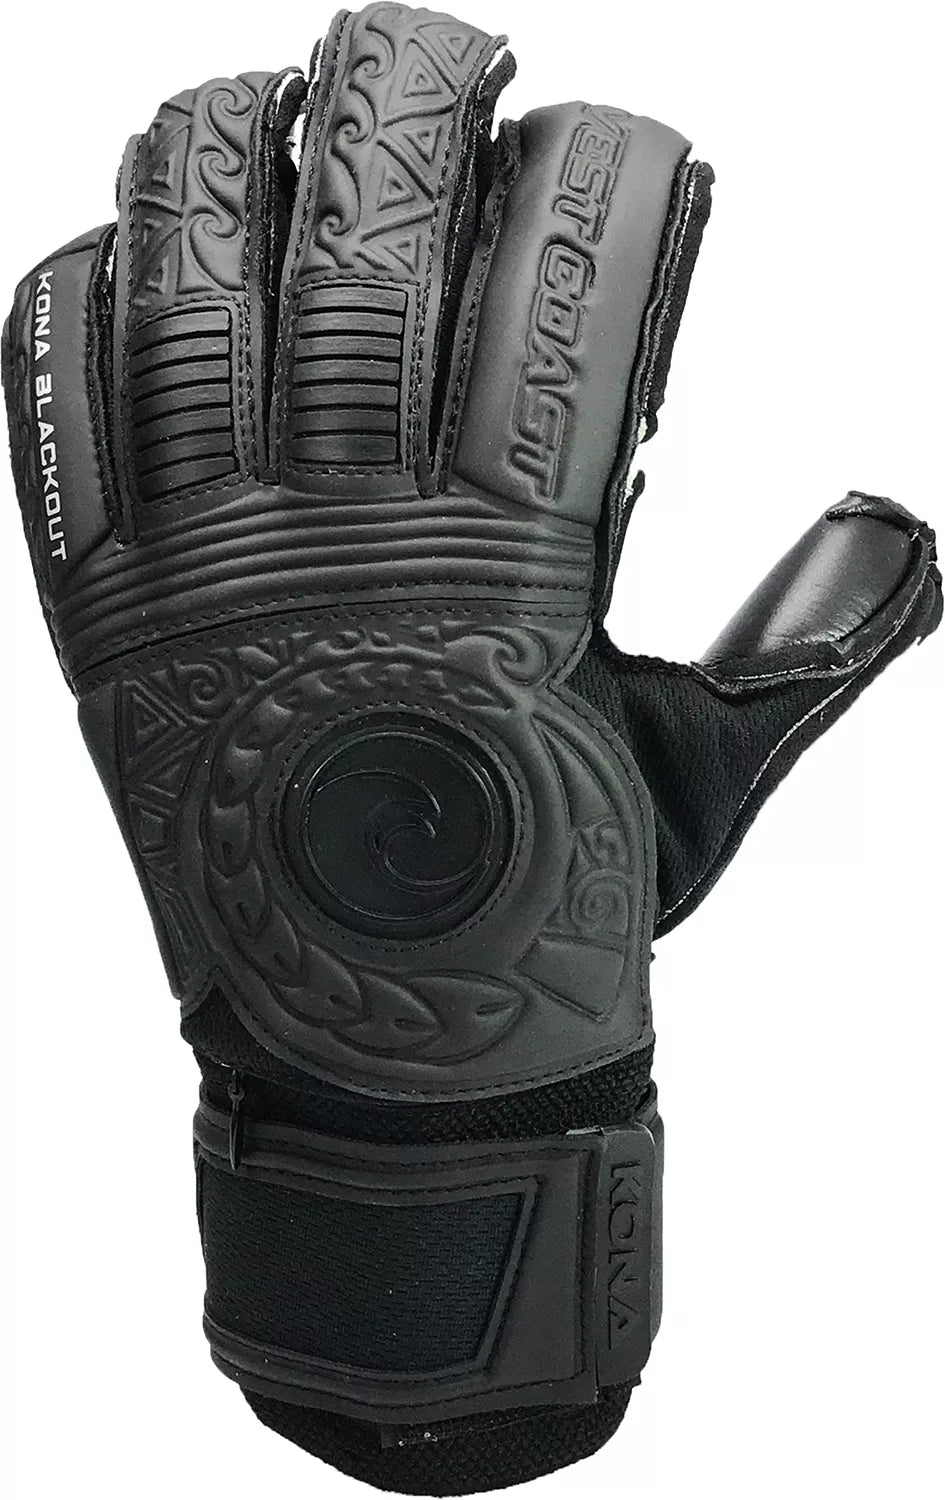 West Coast Kona Blackout Edition Gk Gloves